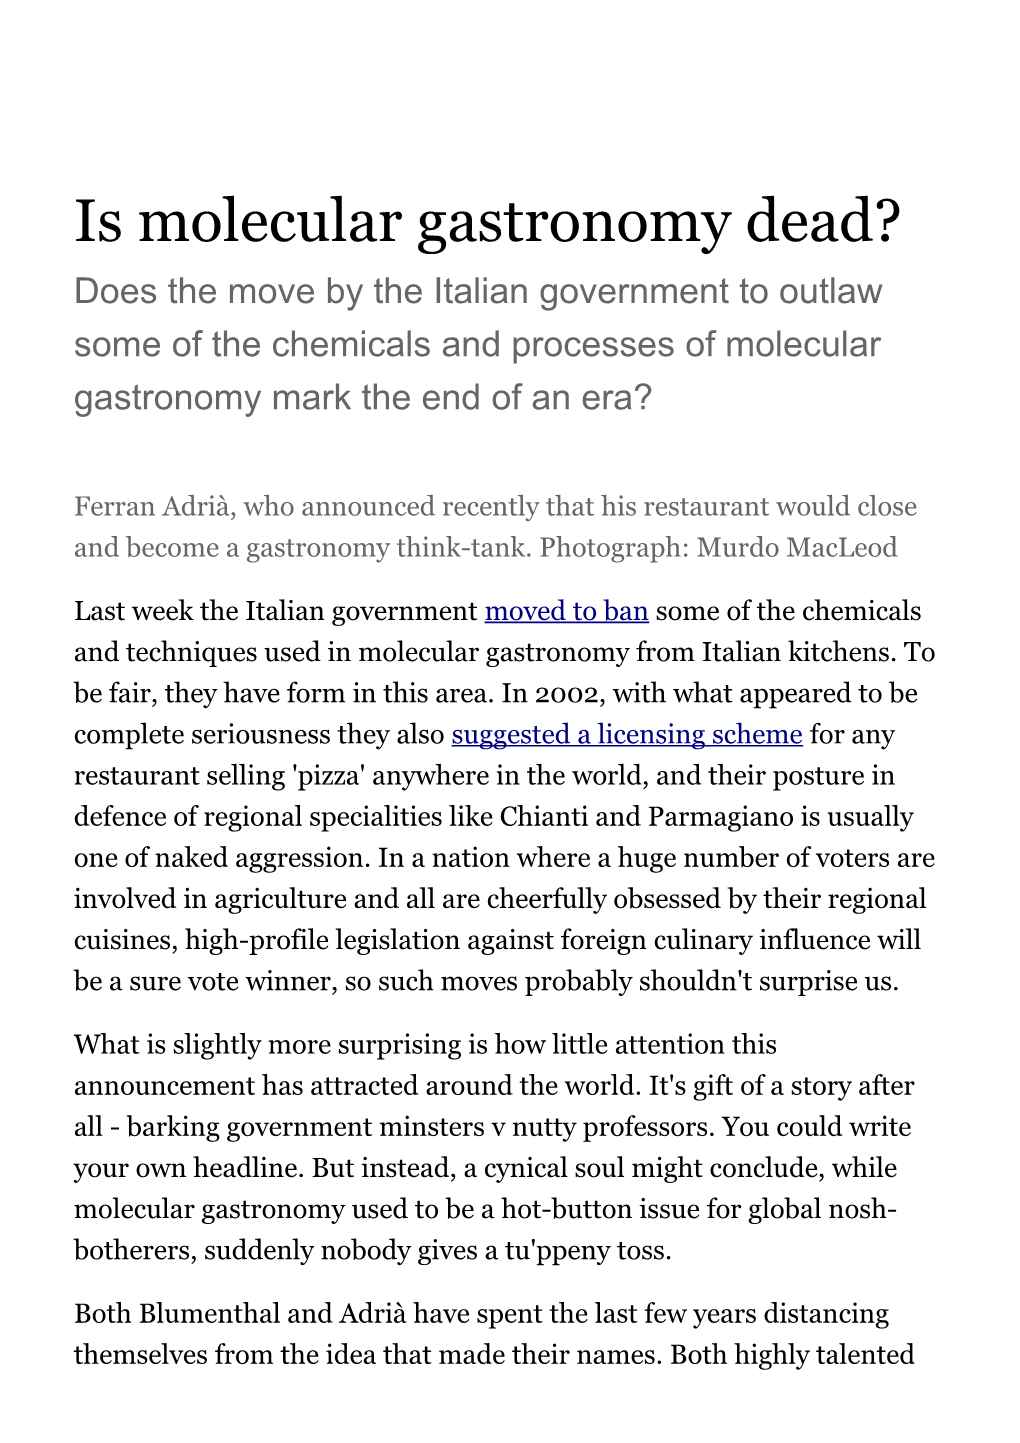 Is Molecular Gastronomy Dead